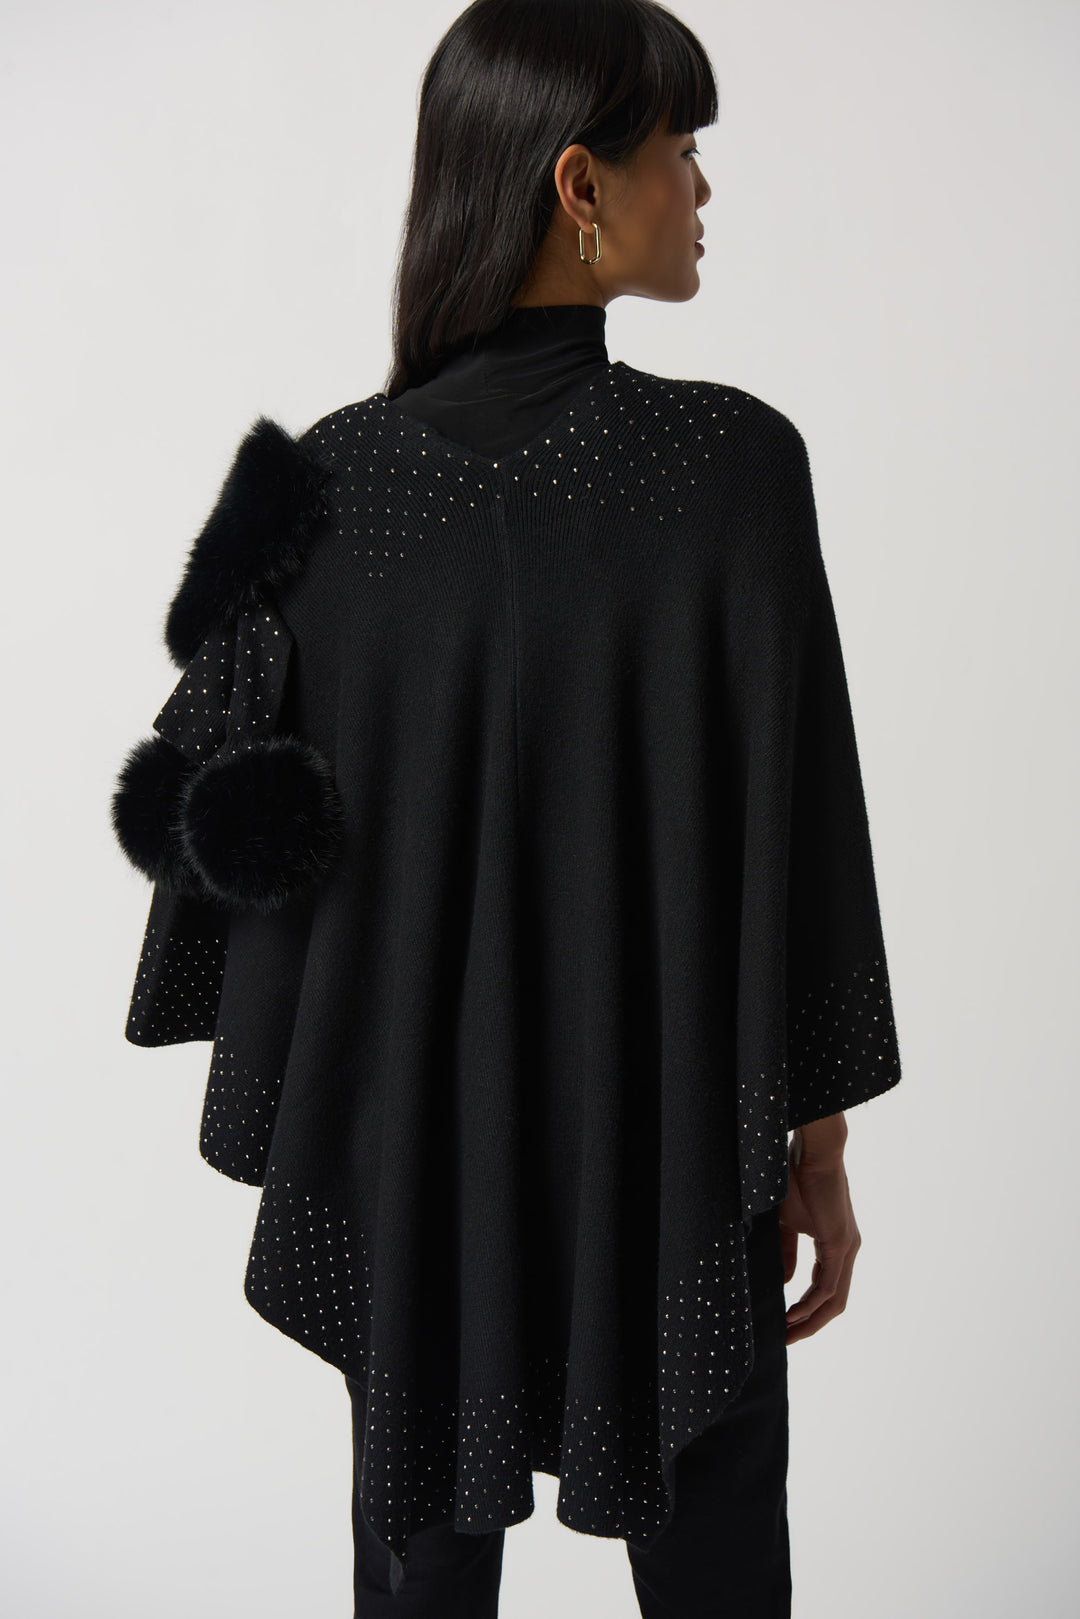 Joseph Ribkoff Fall 2023 women's casual warm wrap poncho faux fur cape with pom poms - black back